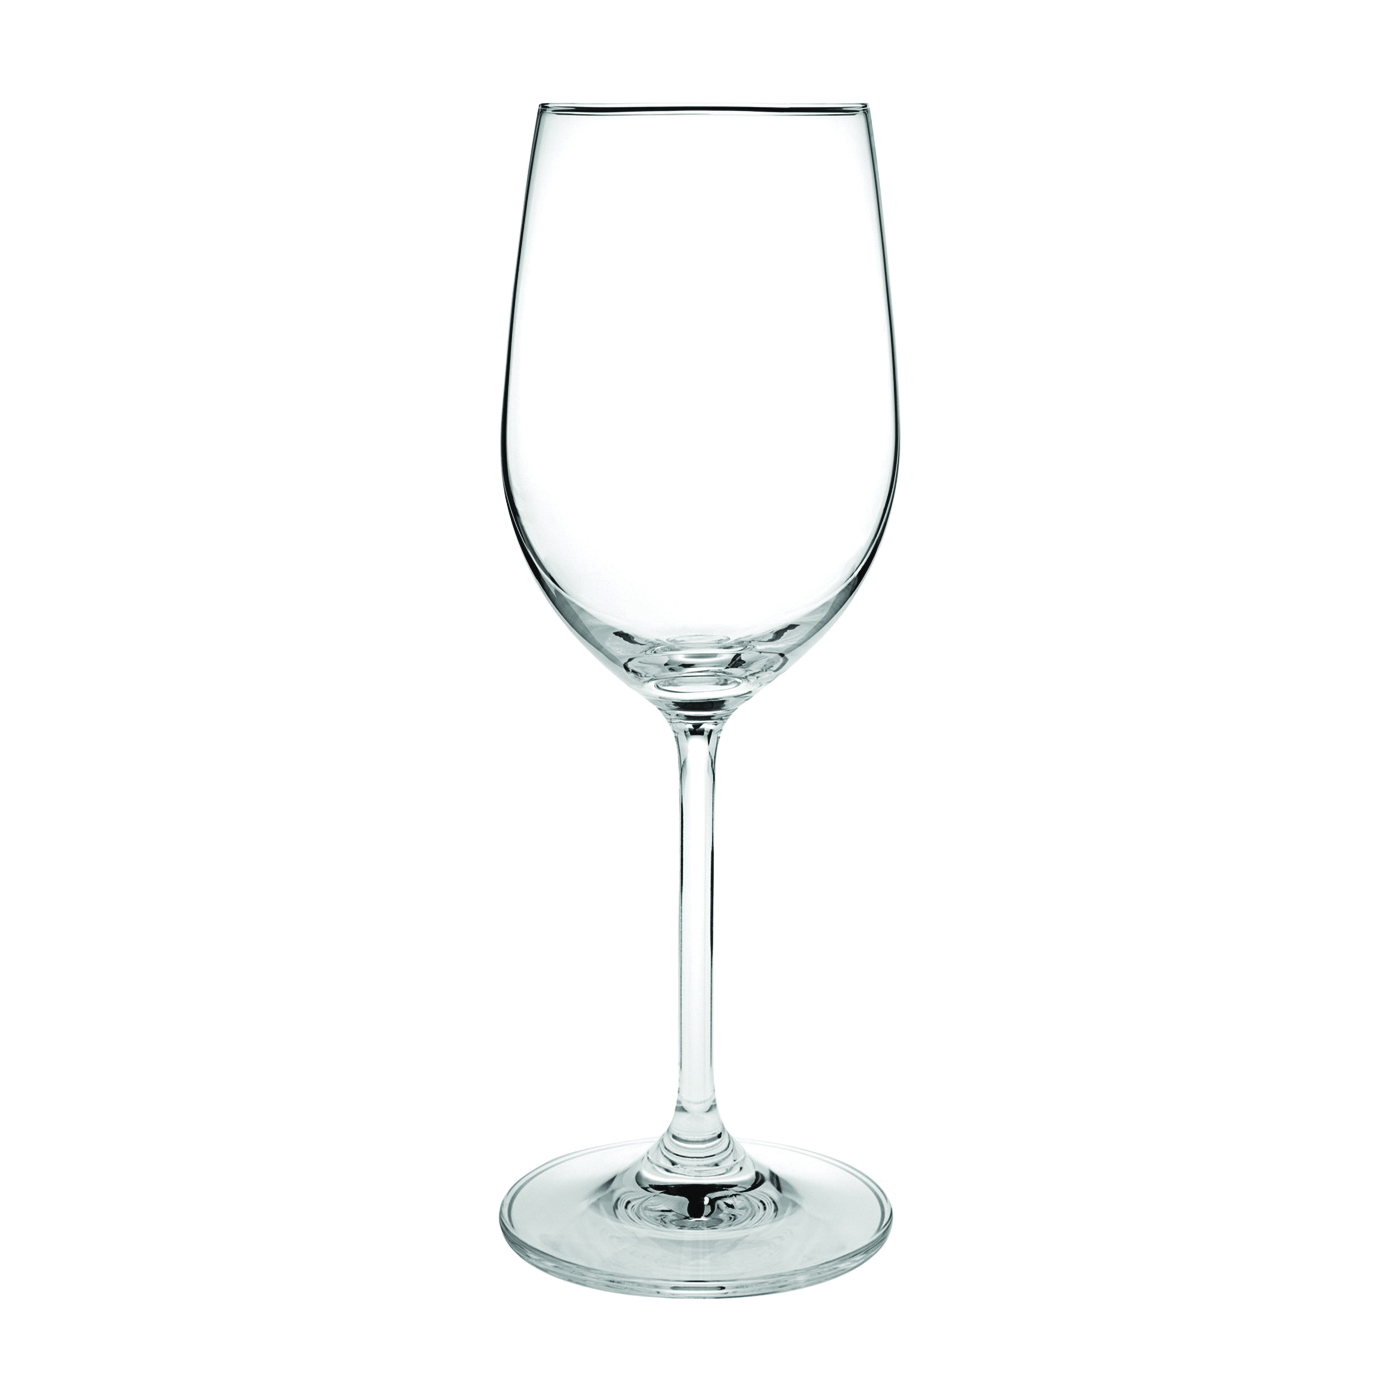 Anchor Hocking 93354 Wine Glass Set, 12 oz Capacity, Crystal Glass, Clear, Dishwasher Safe: Yes - 1